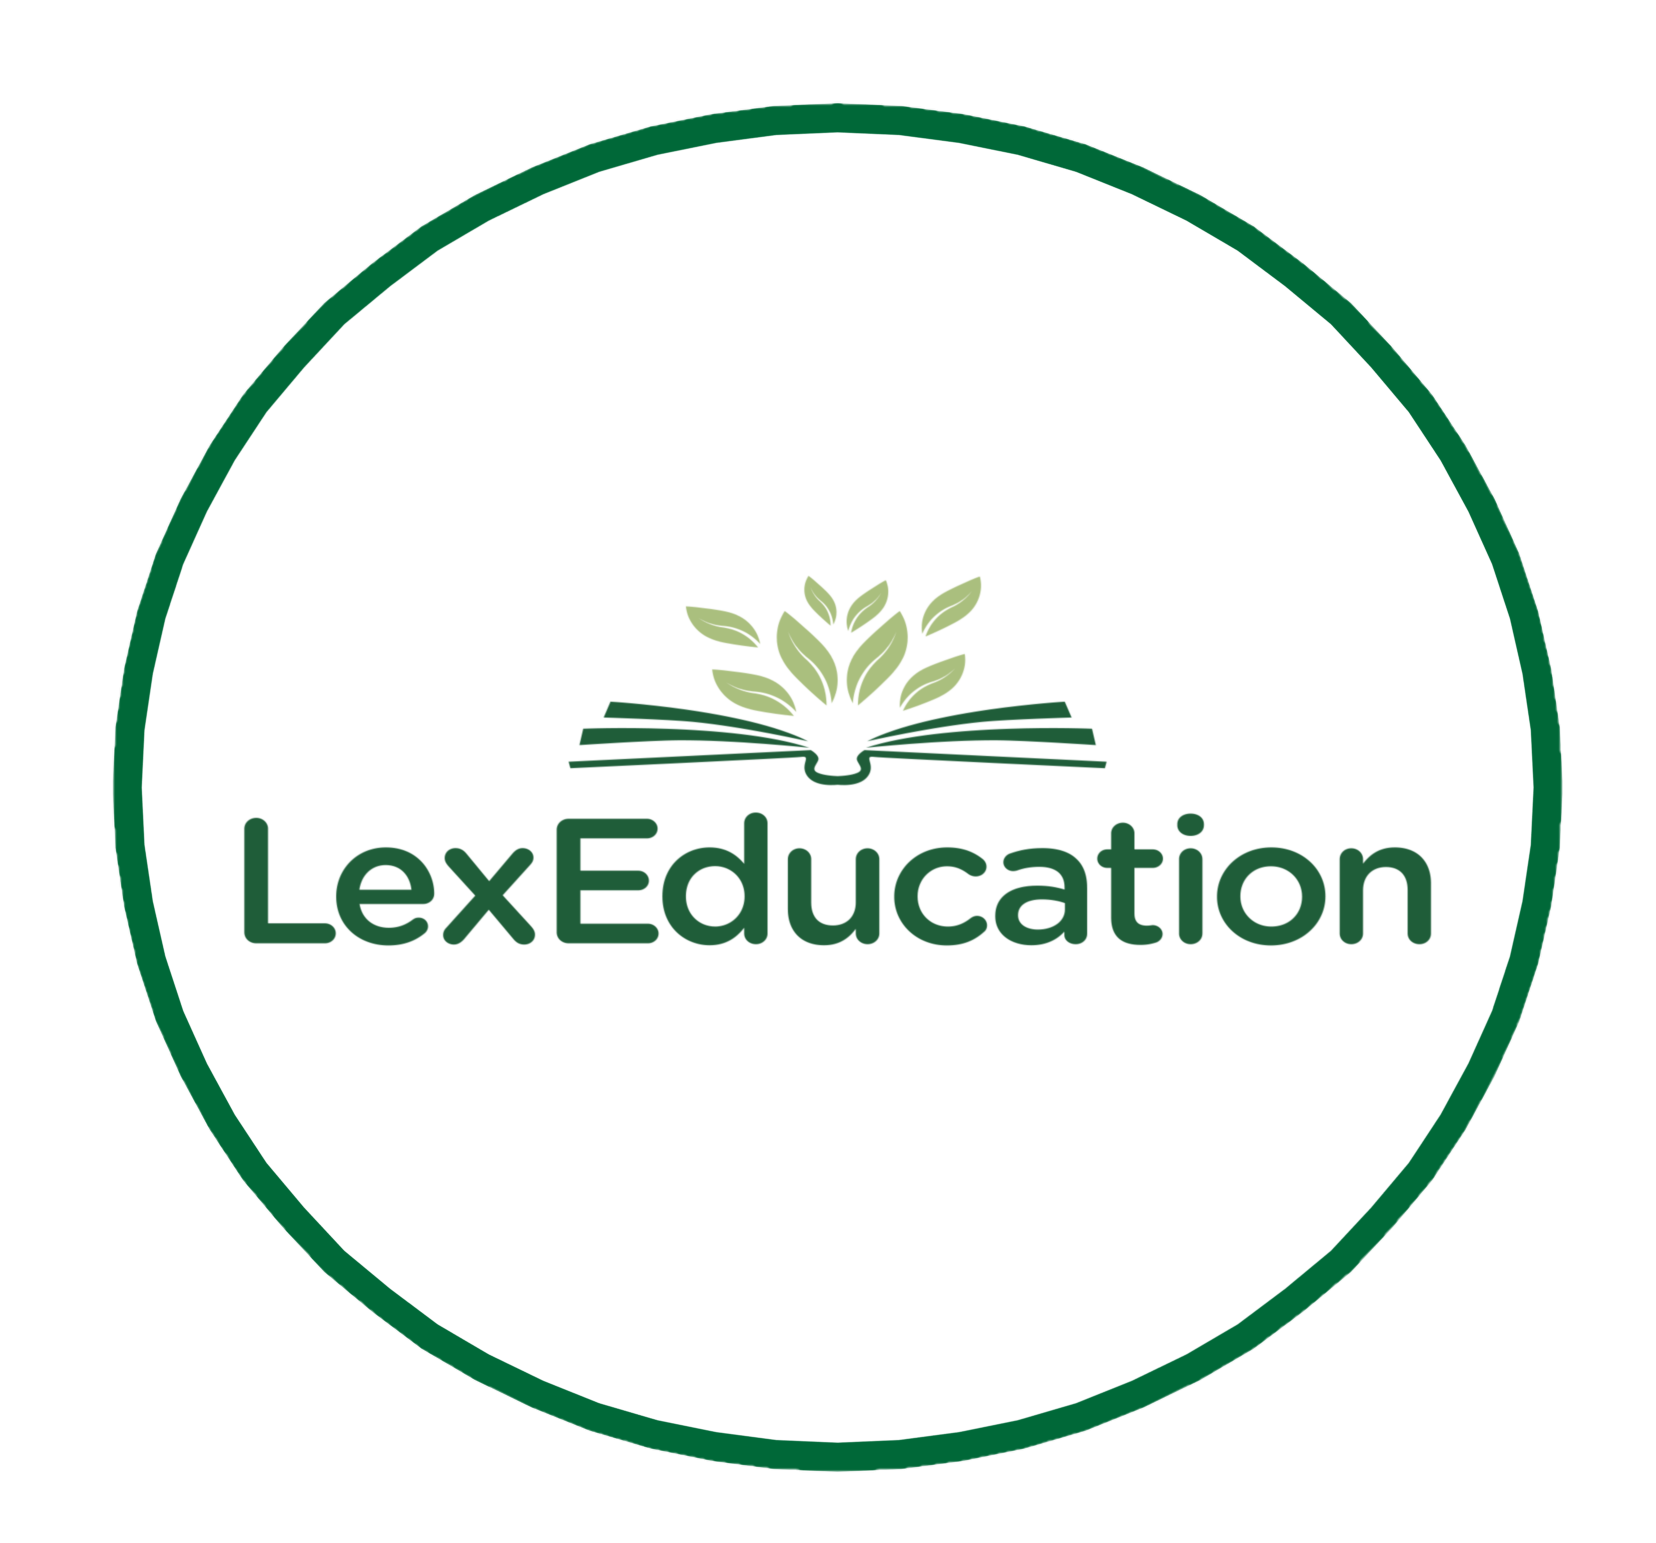 Lex Education